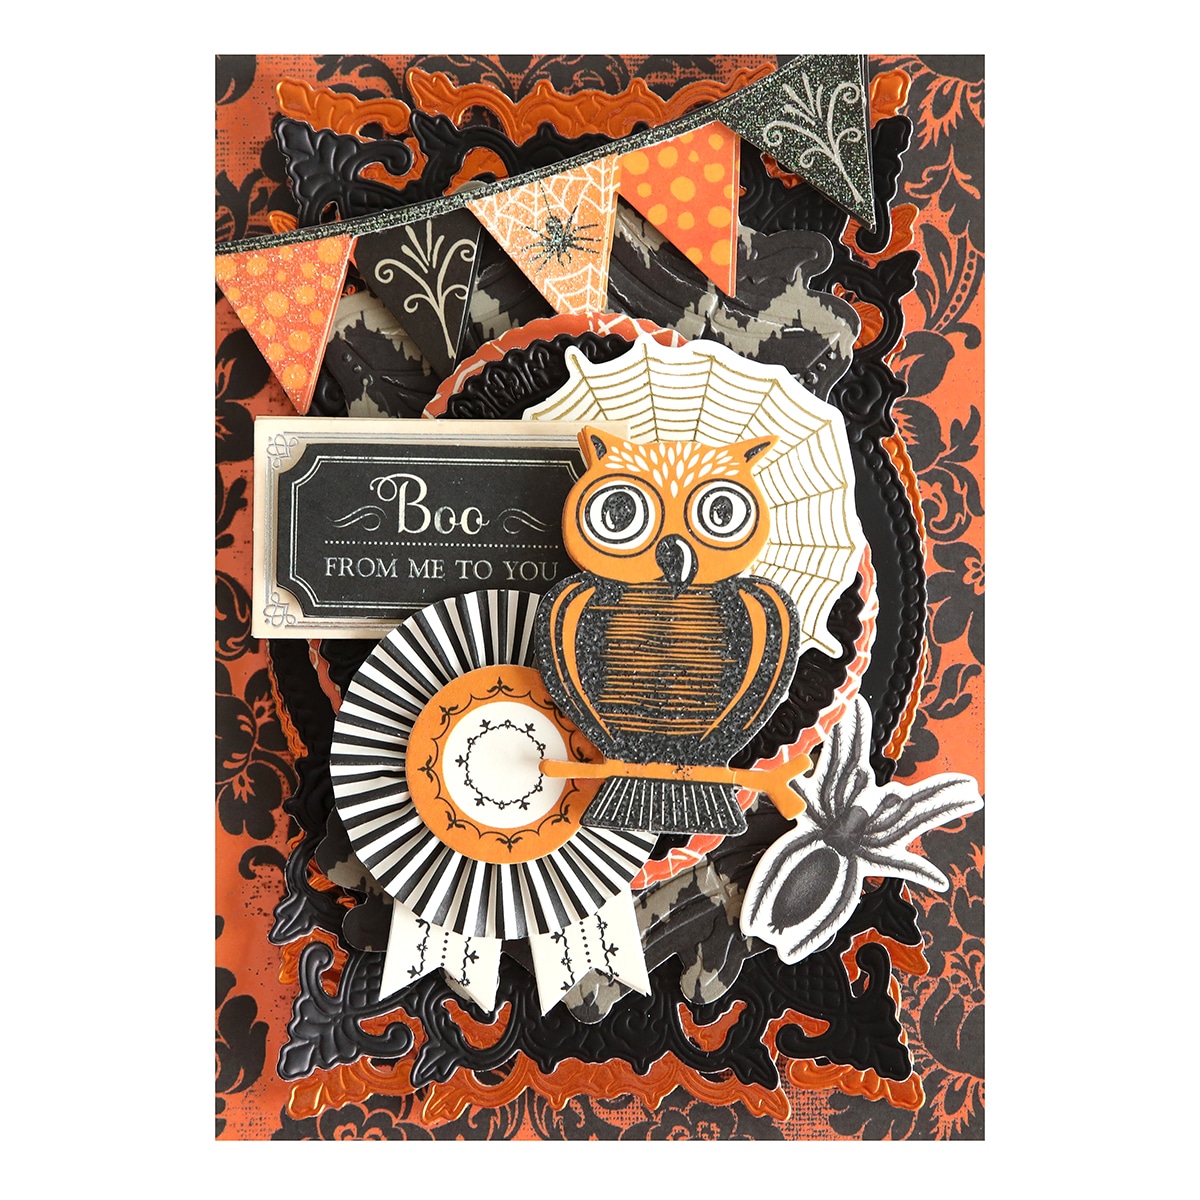 A halloween card with an owl on it.